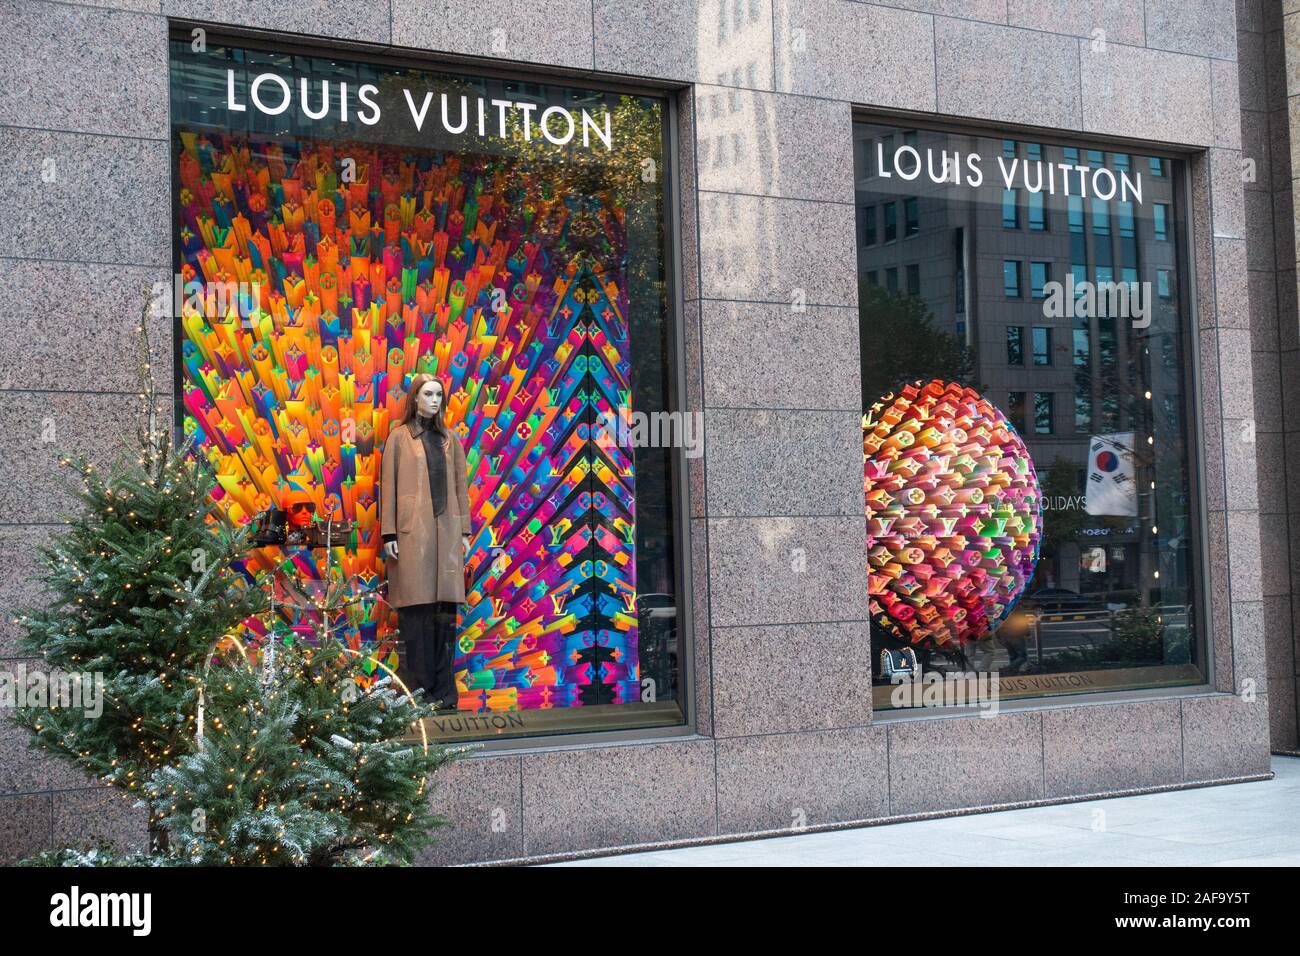 South Korea: Louis Vuitton shop in Seoul Stock Photo - Alamy